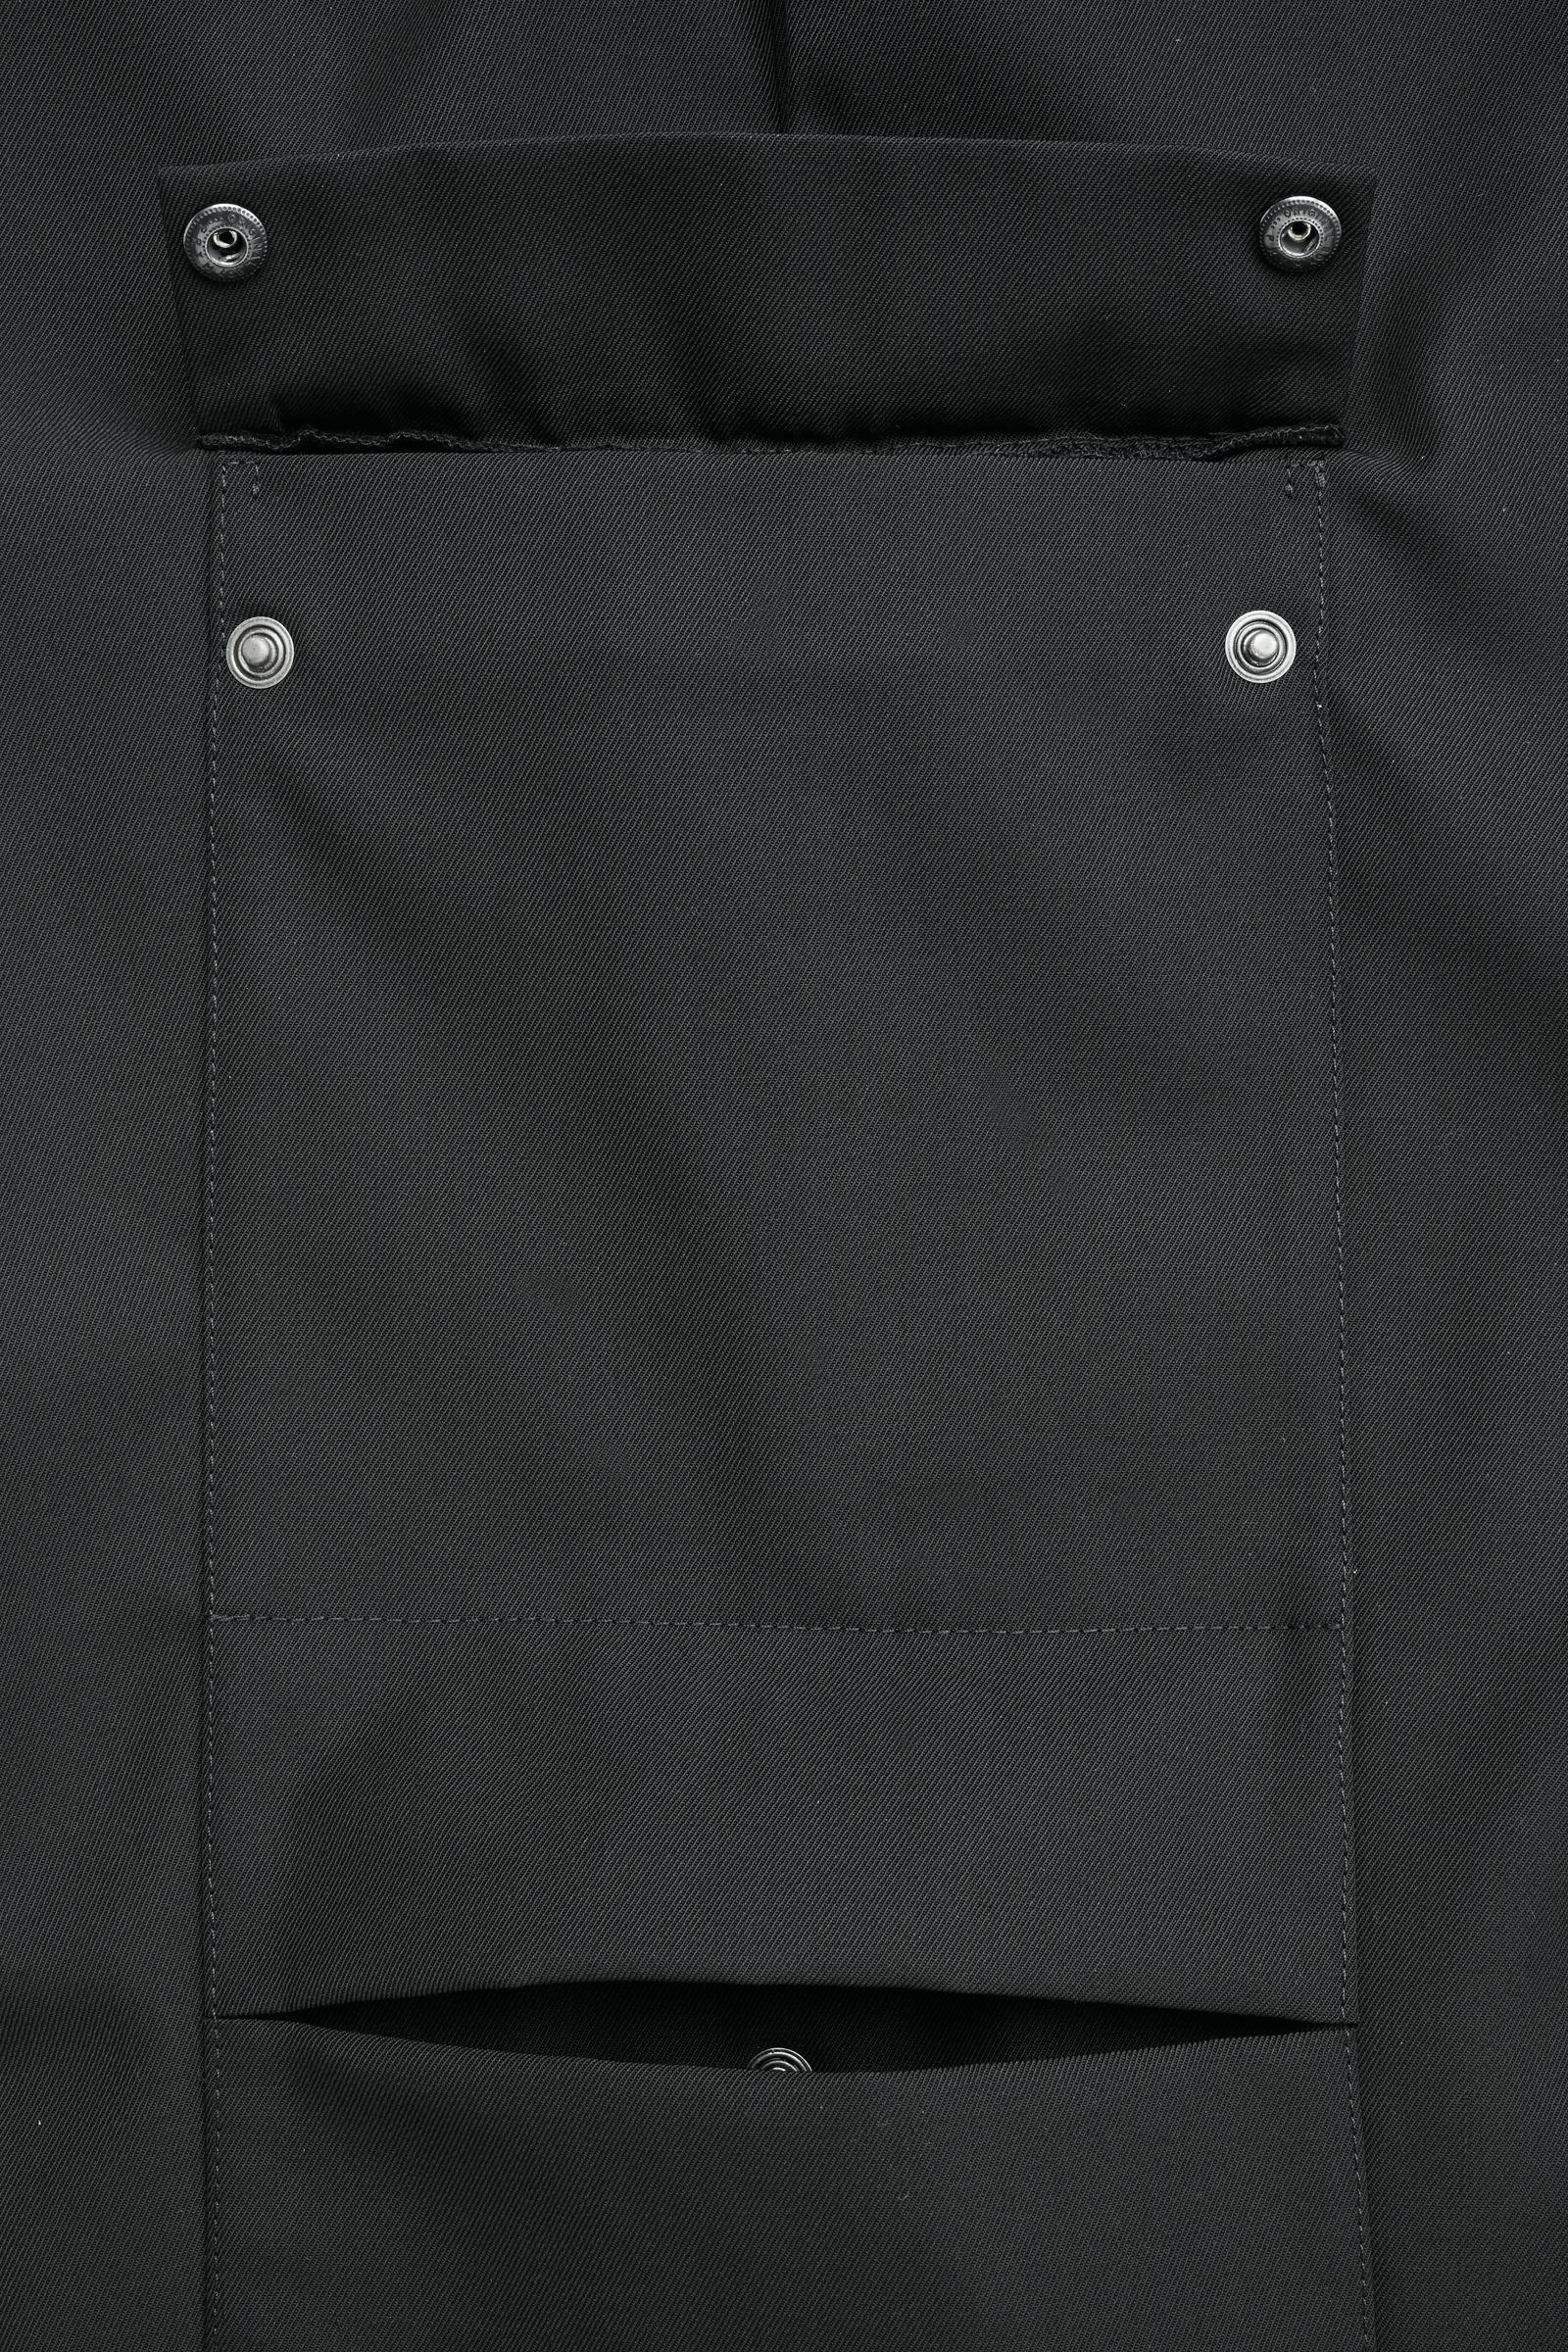 COS Wool Cargo Trousers in Black for Men - Lyst